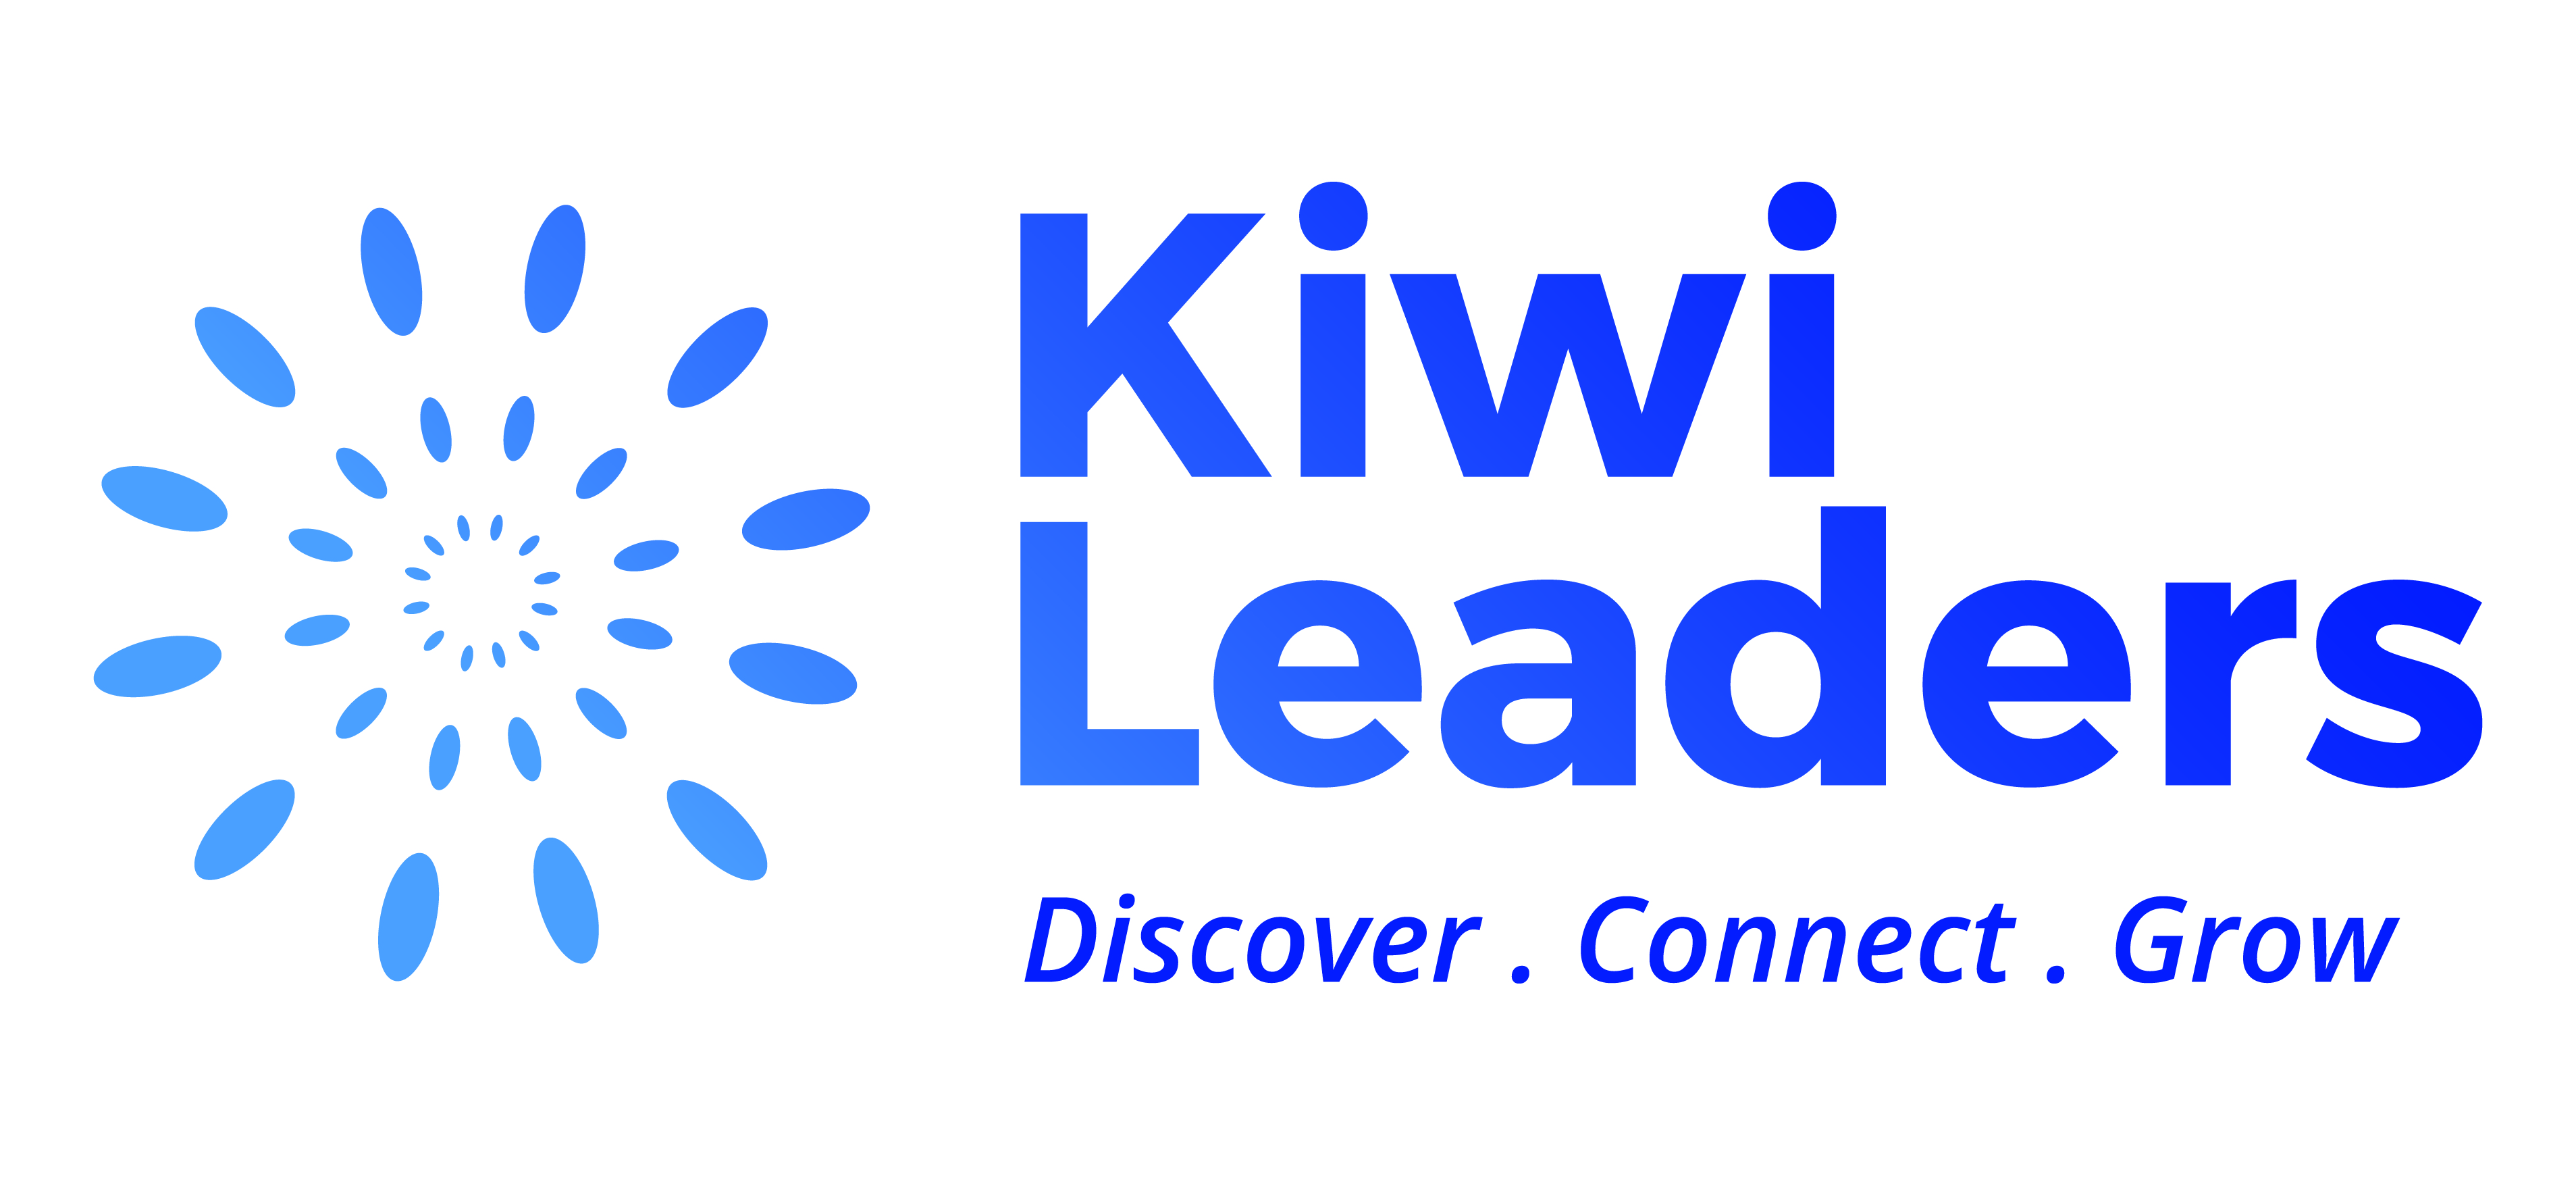 contents/event_sponsors/Kiwi_Leaders_Logo-Colour.jpg